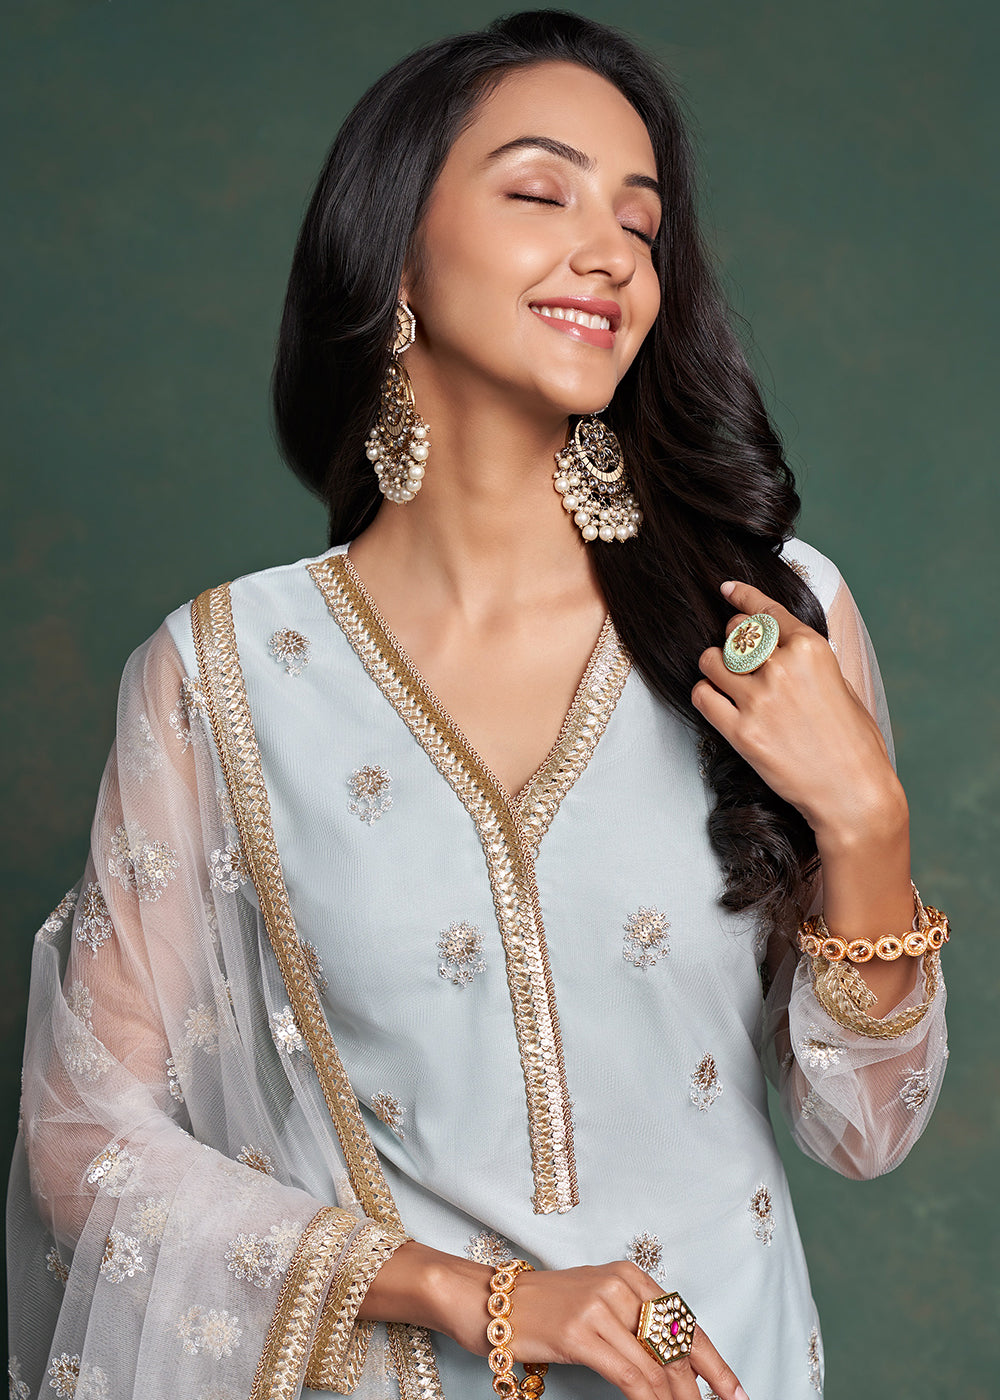 Buy Now Fabulous Sky Blue Zari & Sequins Work Net Wedding Wear Salwar Suit Online in USA, UK, Canada, Germany, Australia & Worldwide at Empress Clothing. 